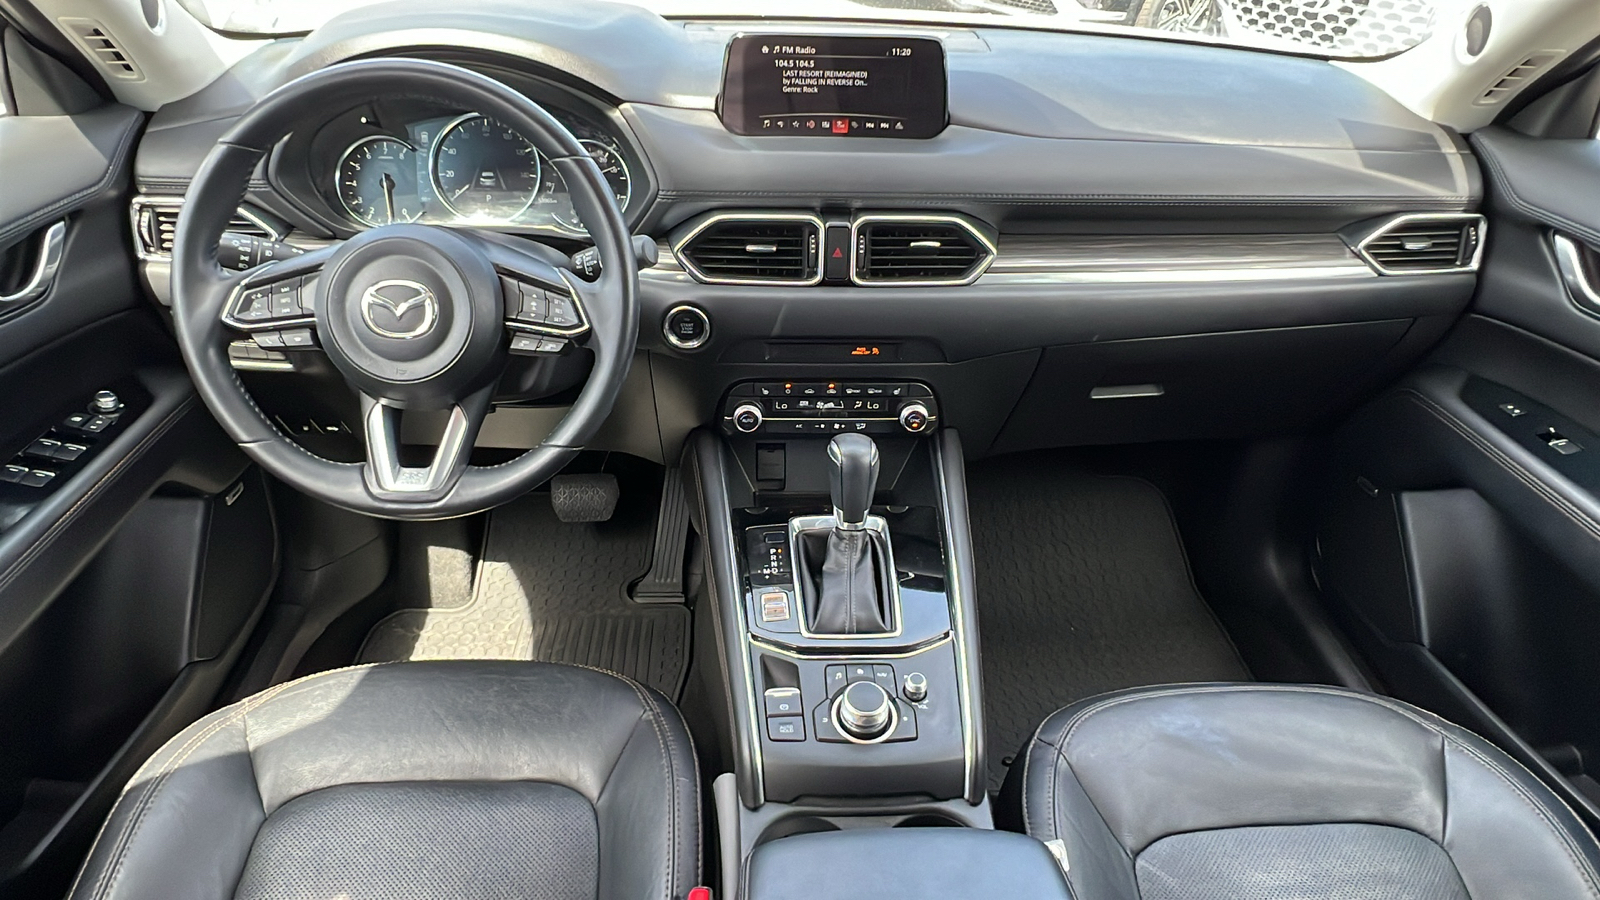 2019 Mazda CX-5 Grand Touring 10